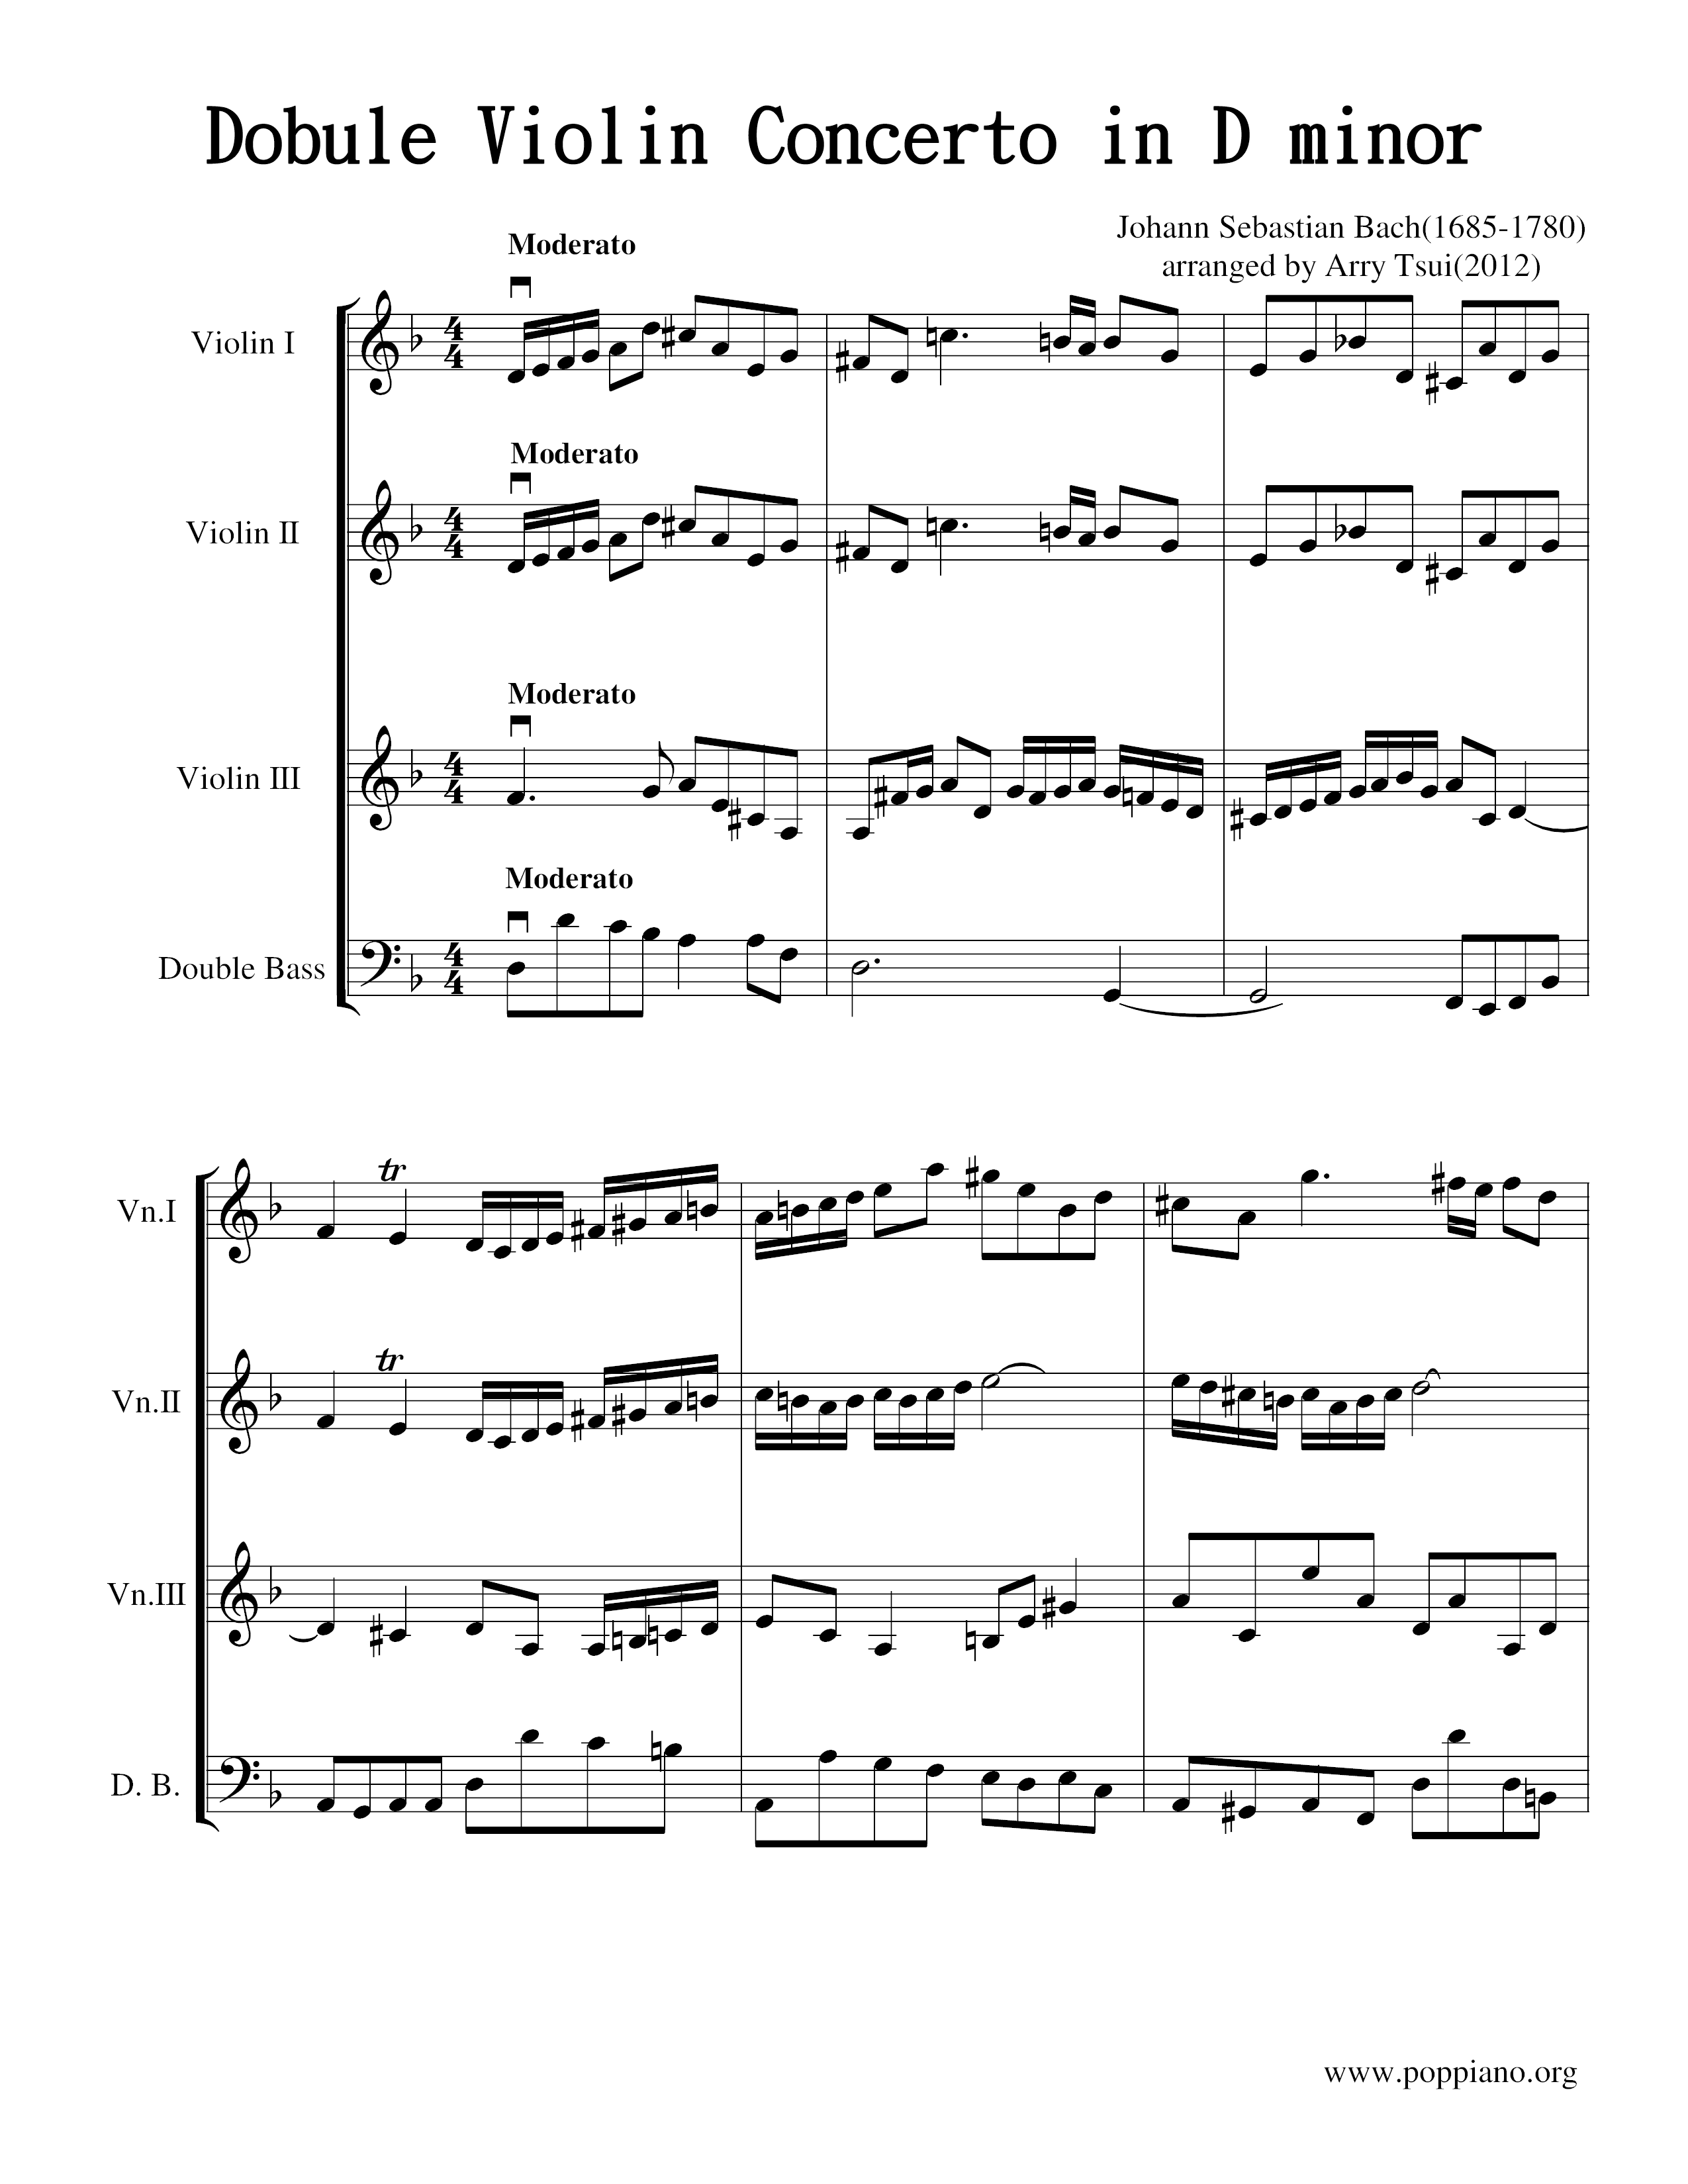 Dobule Violin Concerto in D minor NO.1ピアノ譜